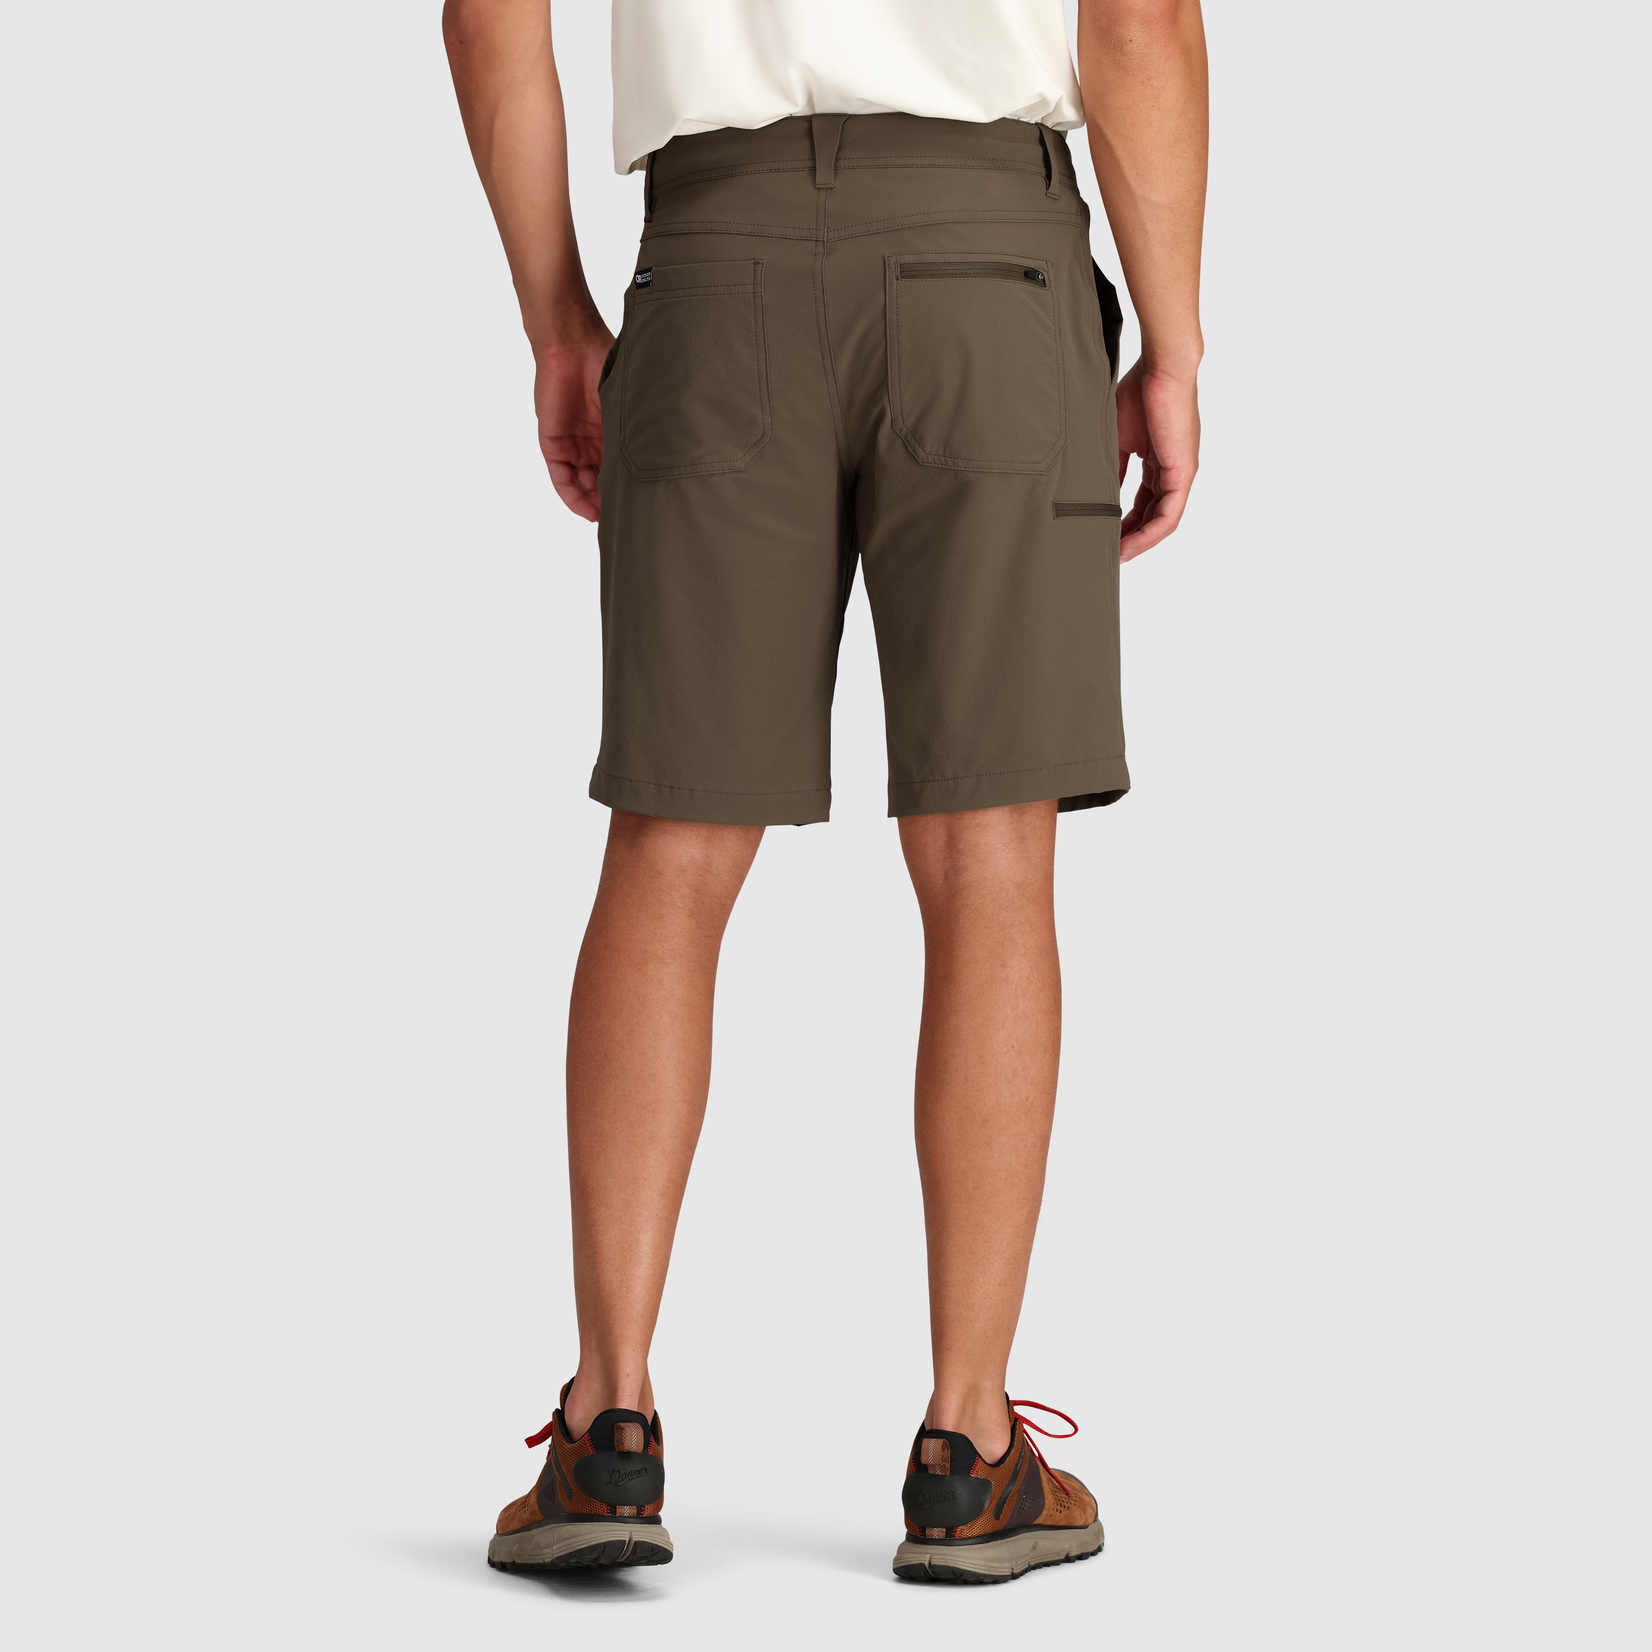 Outdoor Research Men's Ferrosi Shorts - 10 Inseam